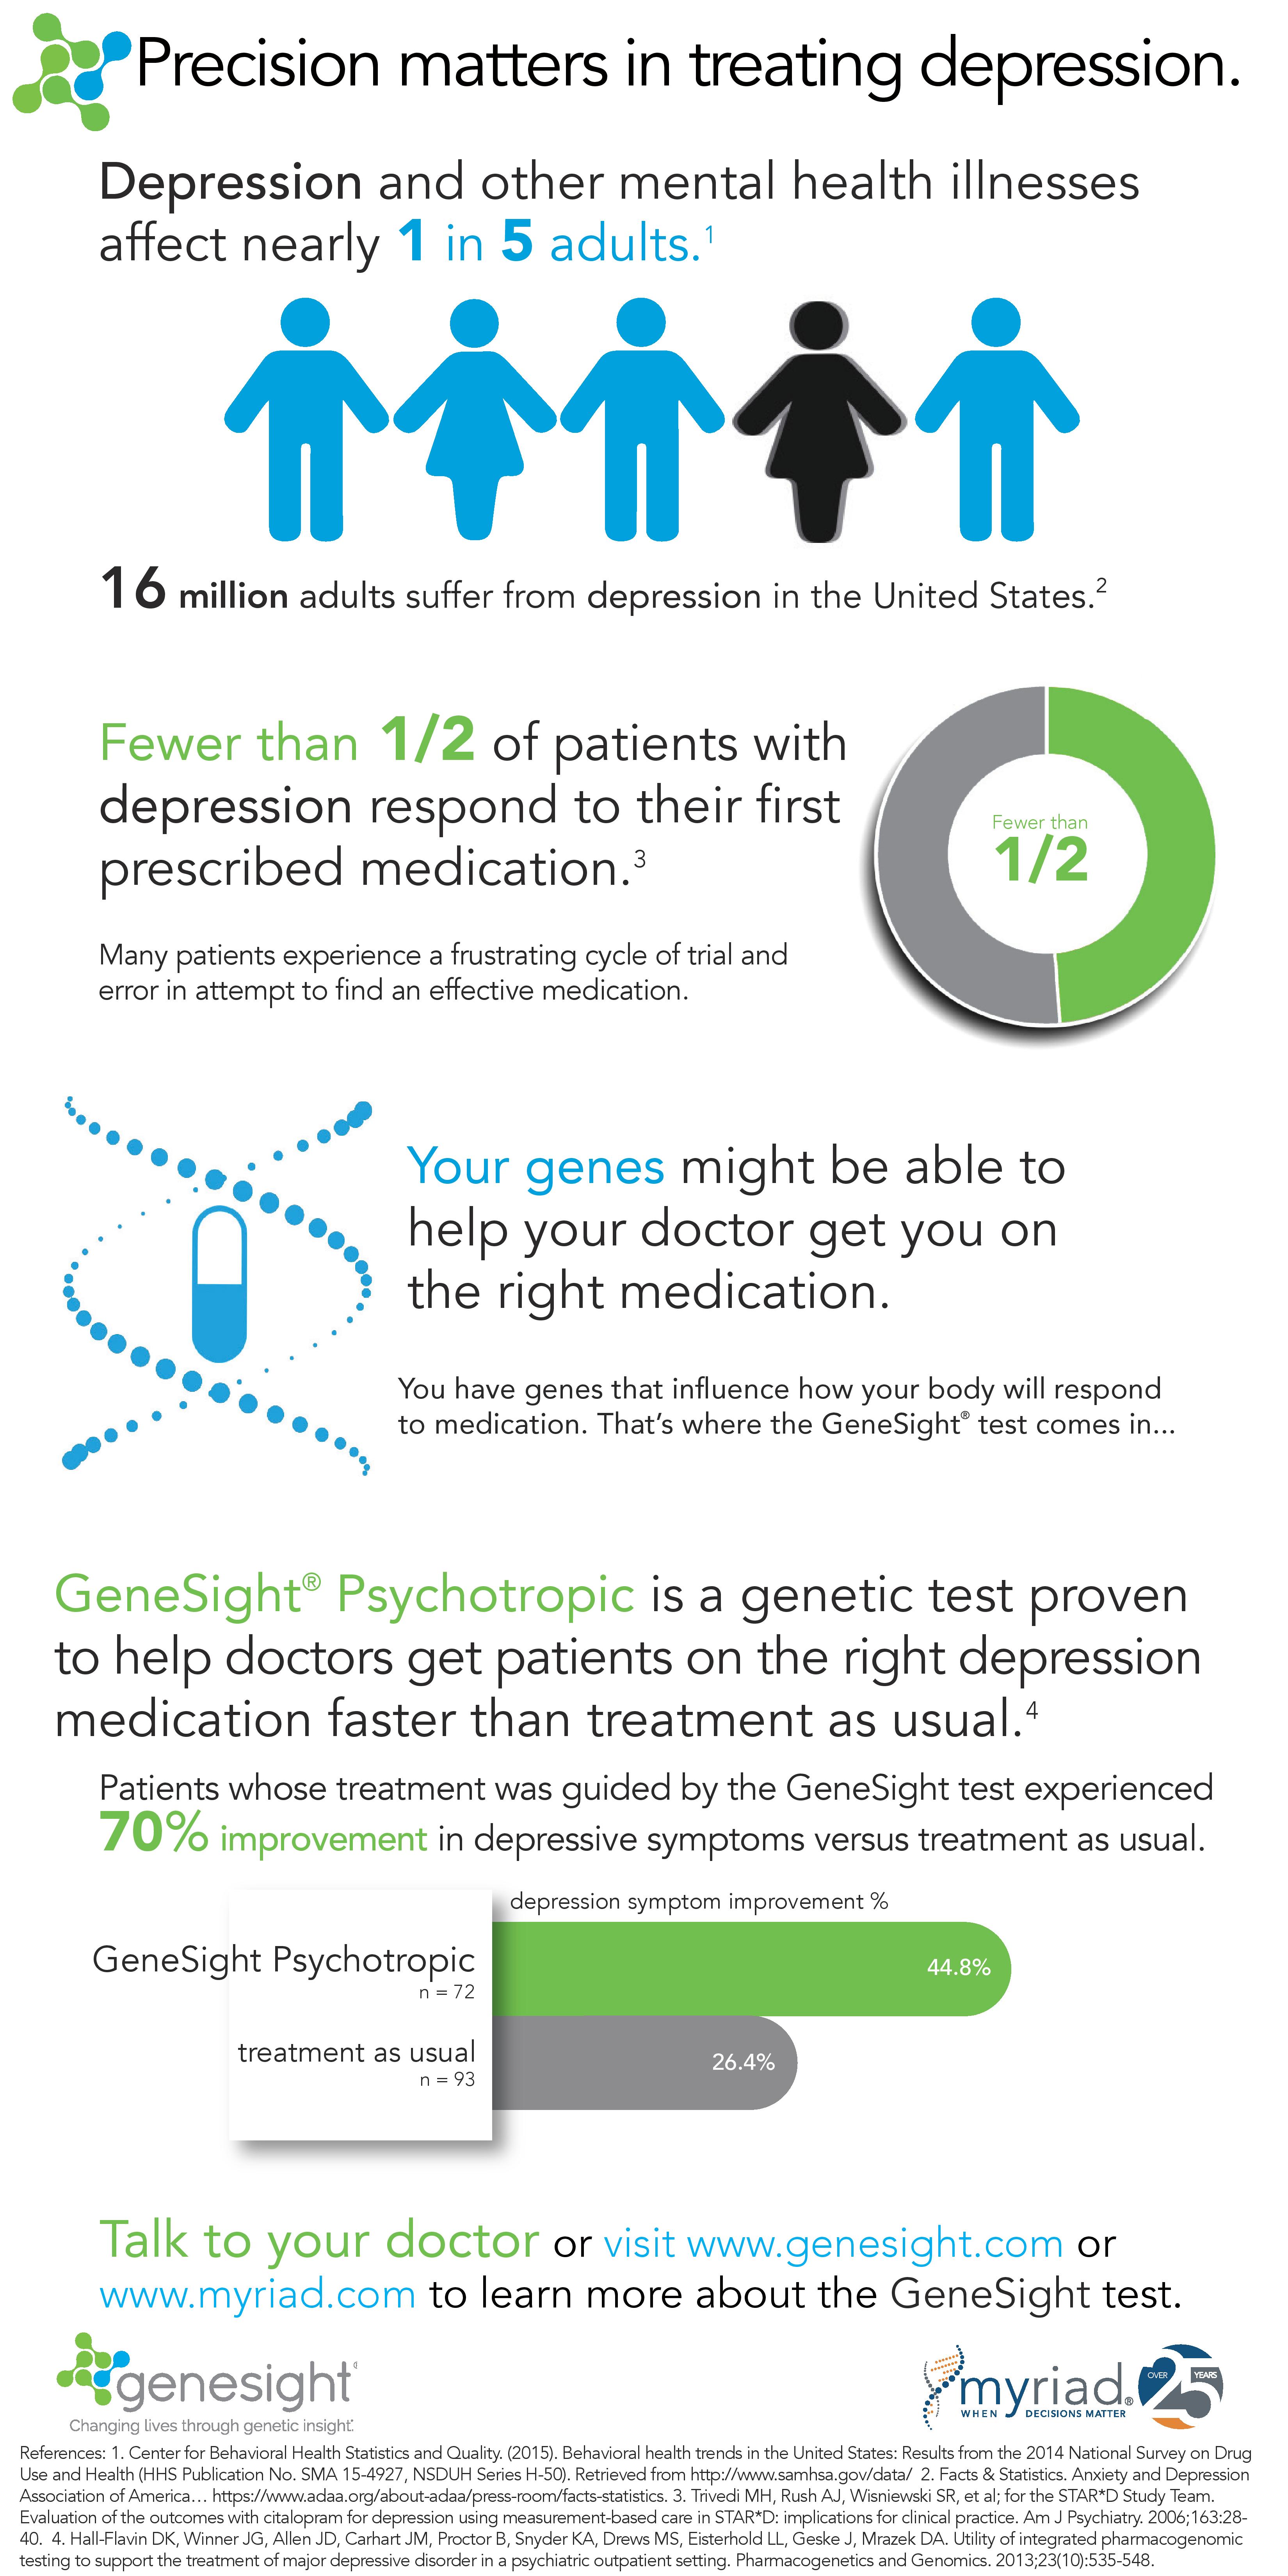 GeneSight Psychotropic is based on pharmacogenomics—the study of how